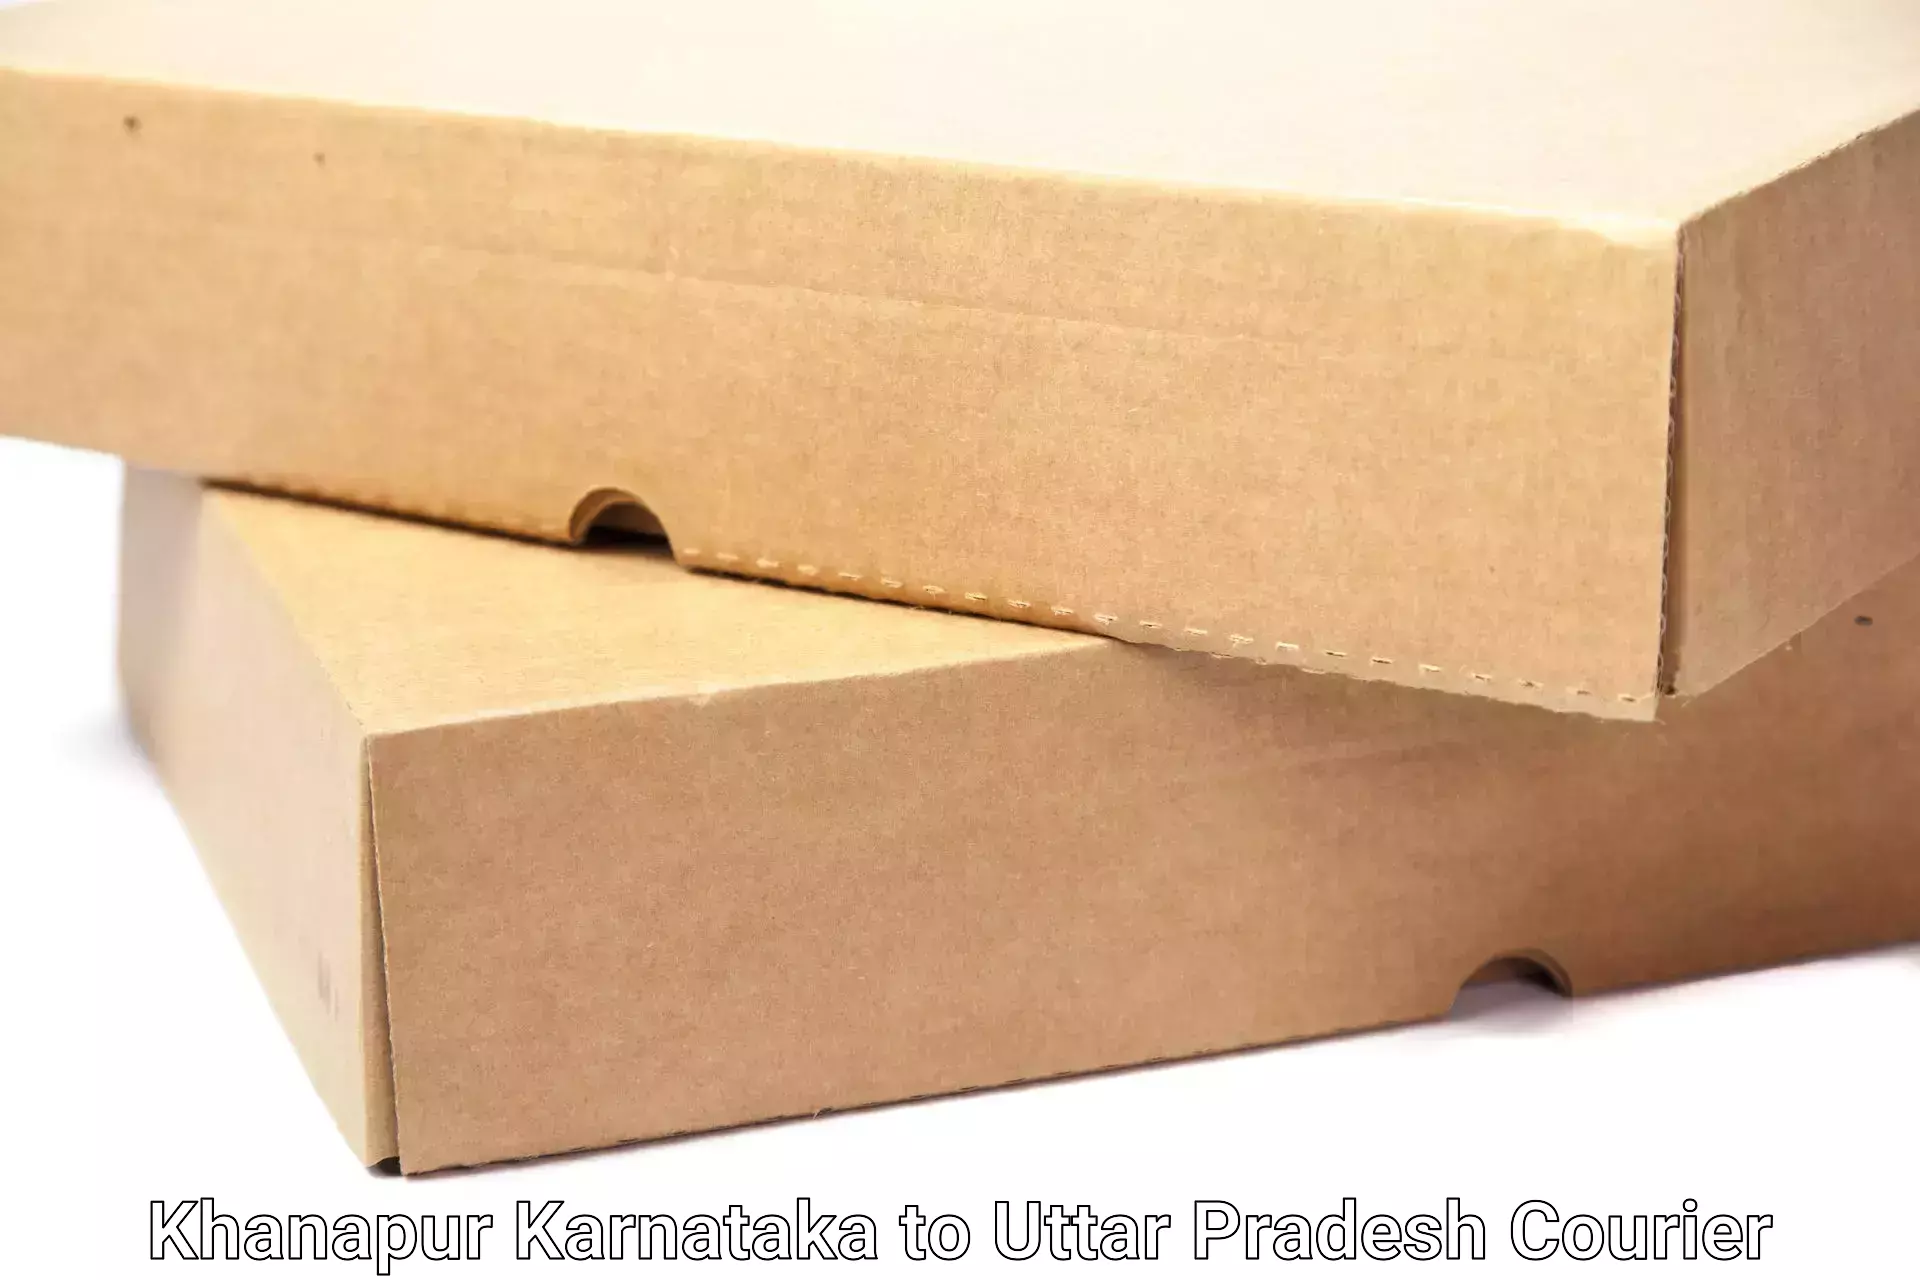 Professional furniture movers Khanapur Karnataka to Kannauj